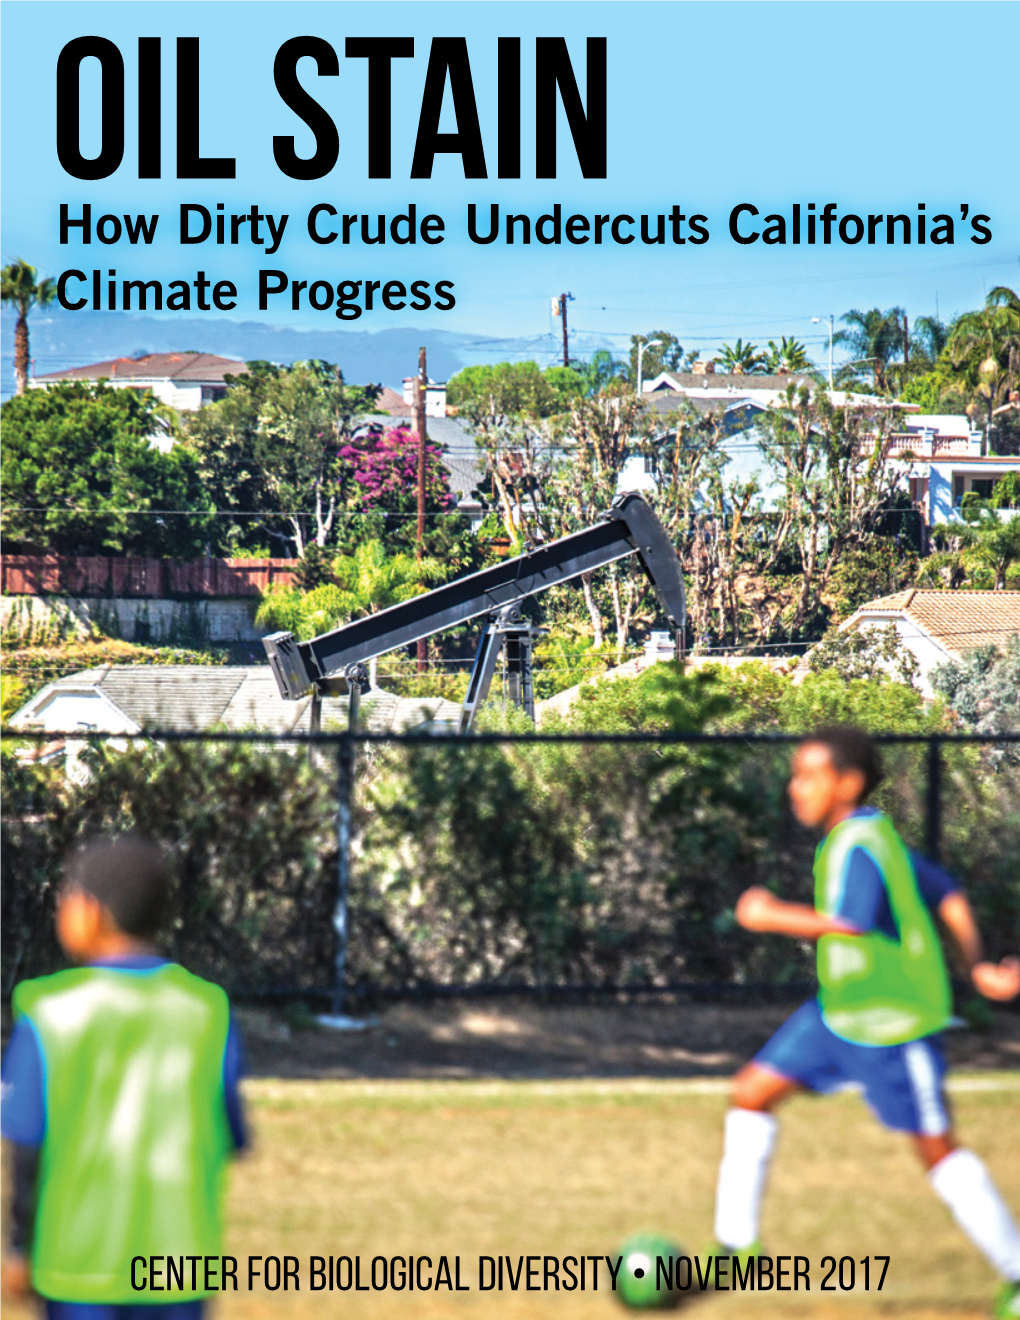 Oil Stain: How Dirty Crude Undercuts California's Climate Progress